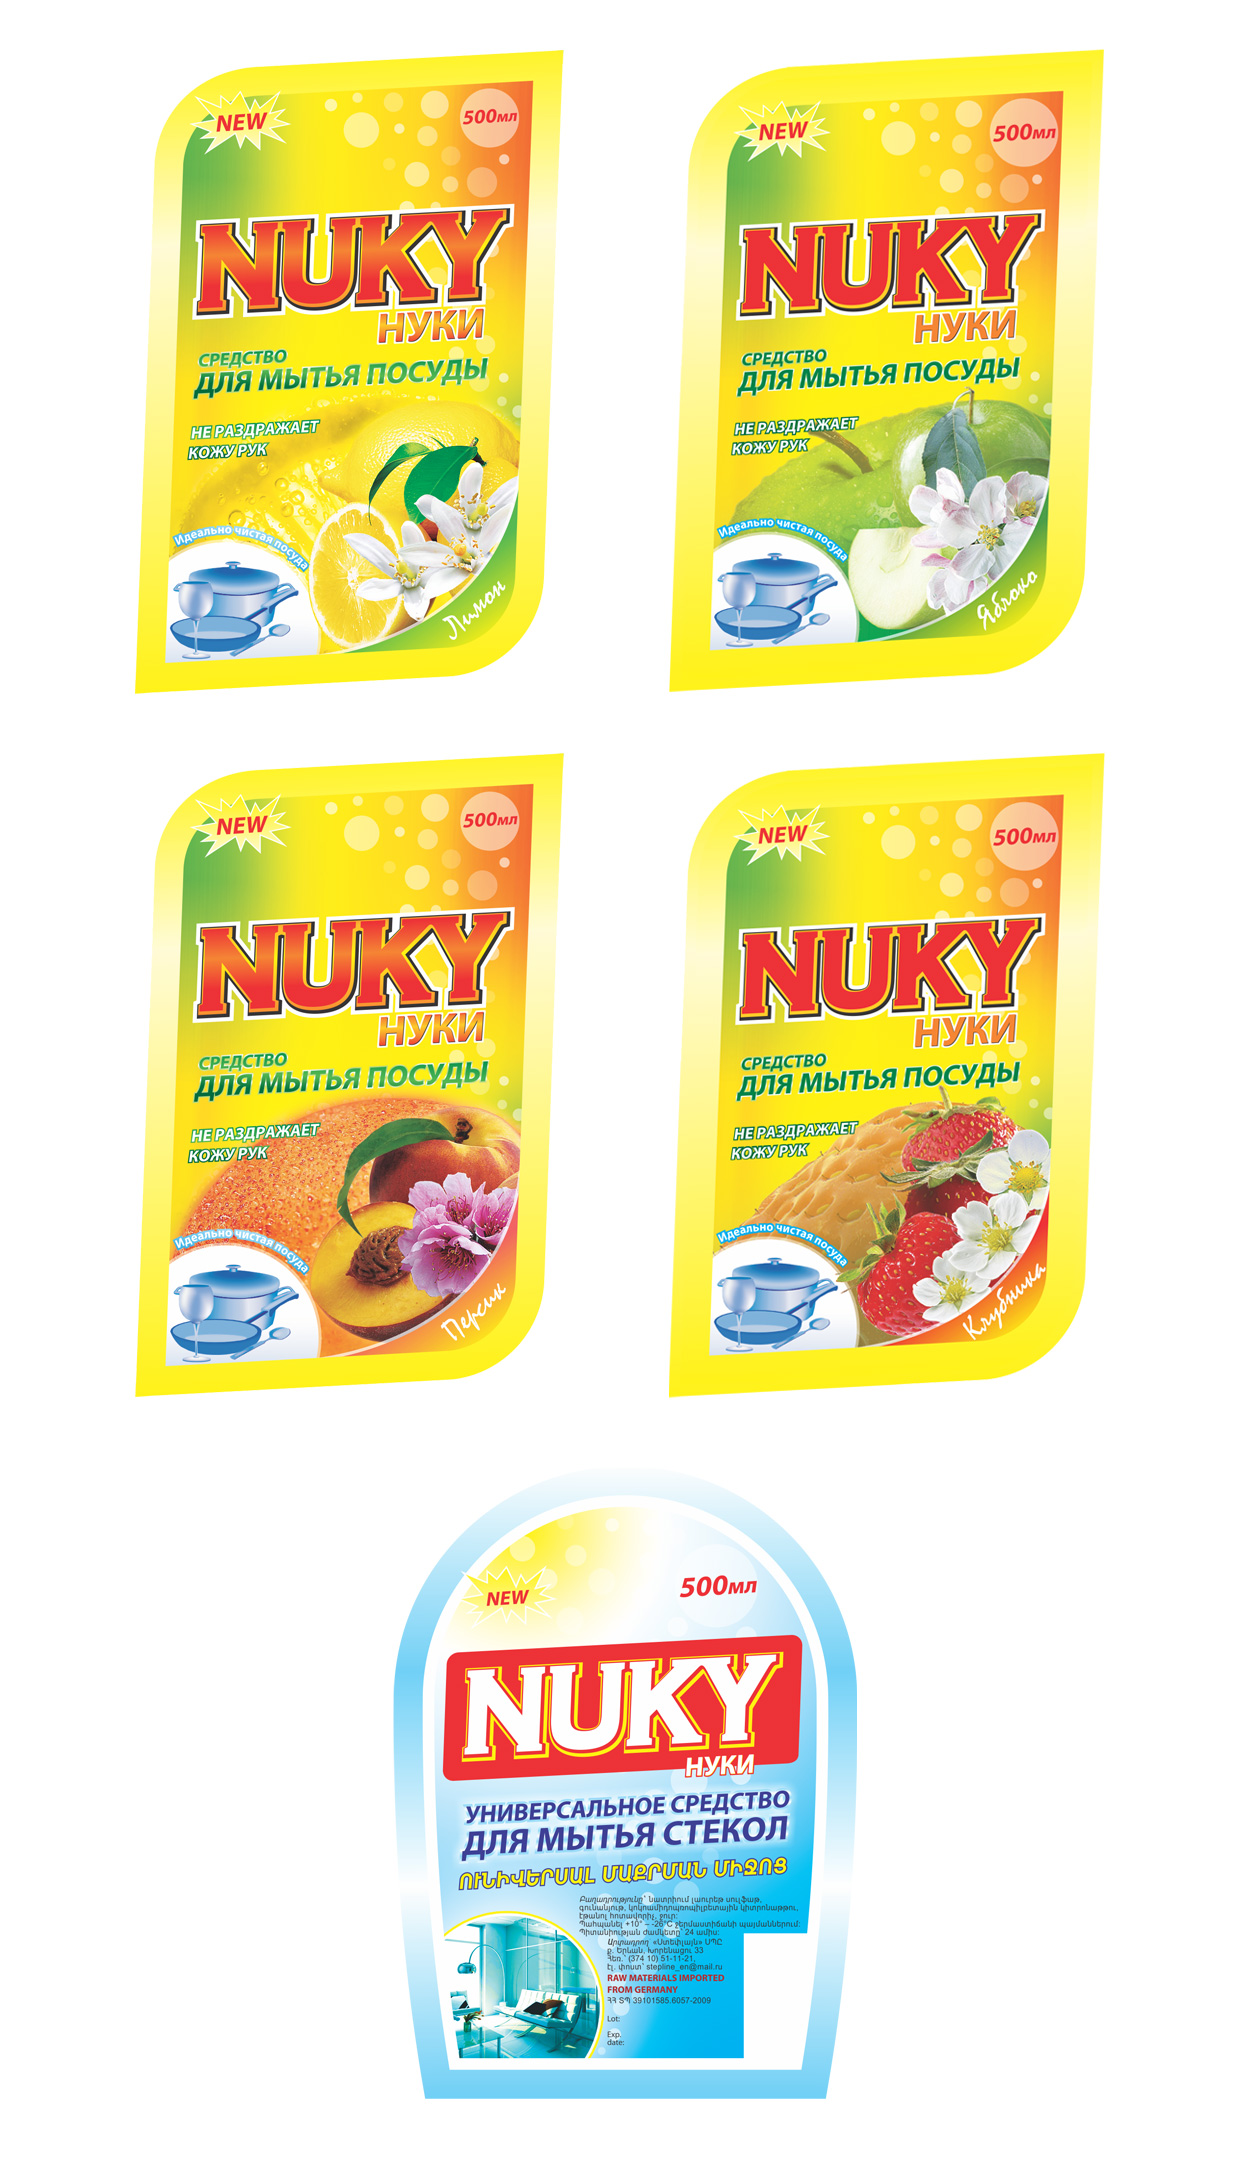 Nuky-Liquid Soap / Dishwashing Liquid / Glass Cleaner: Label Design